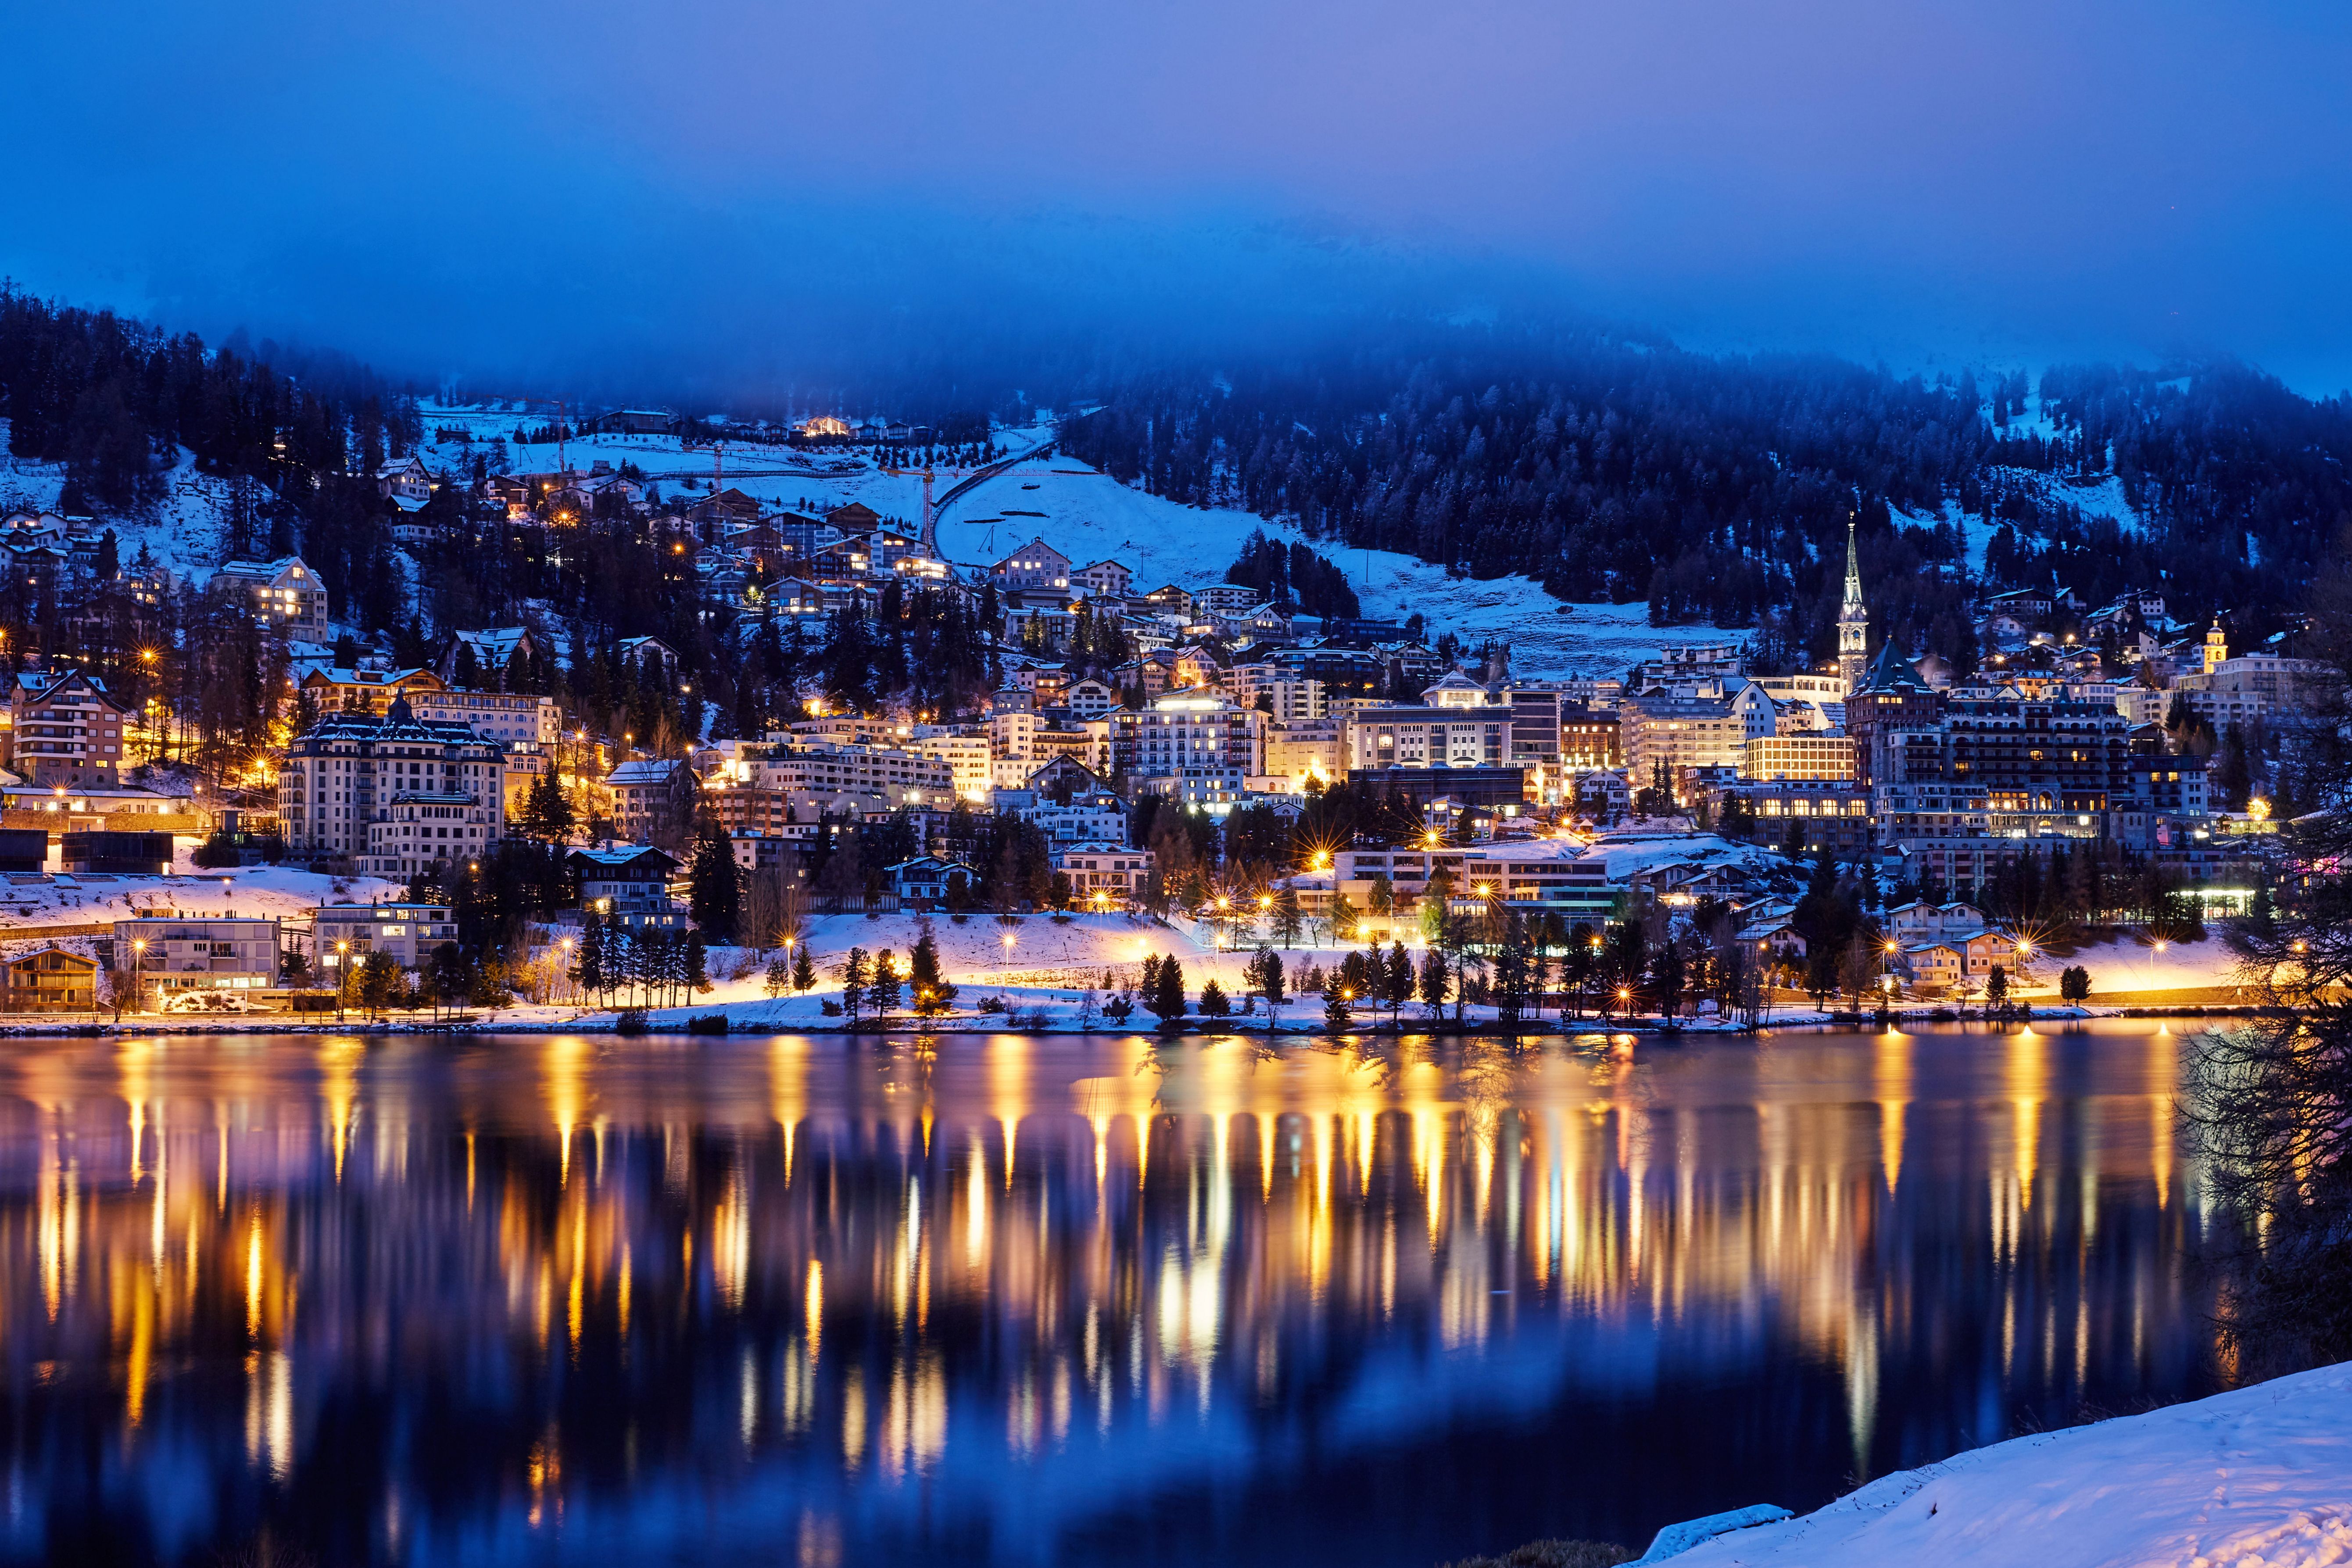 St. Moritz Resort town at night with light reflecting on the lake, Swiss Alps, Switzterland